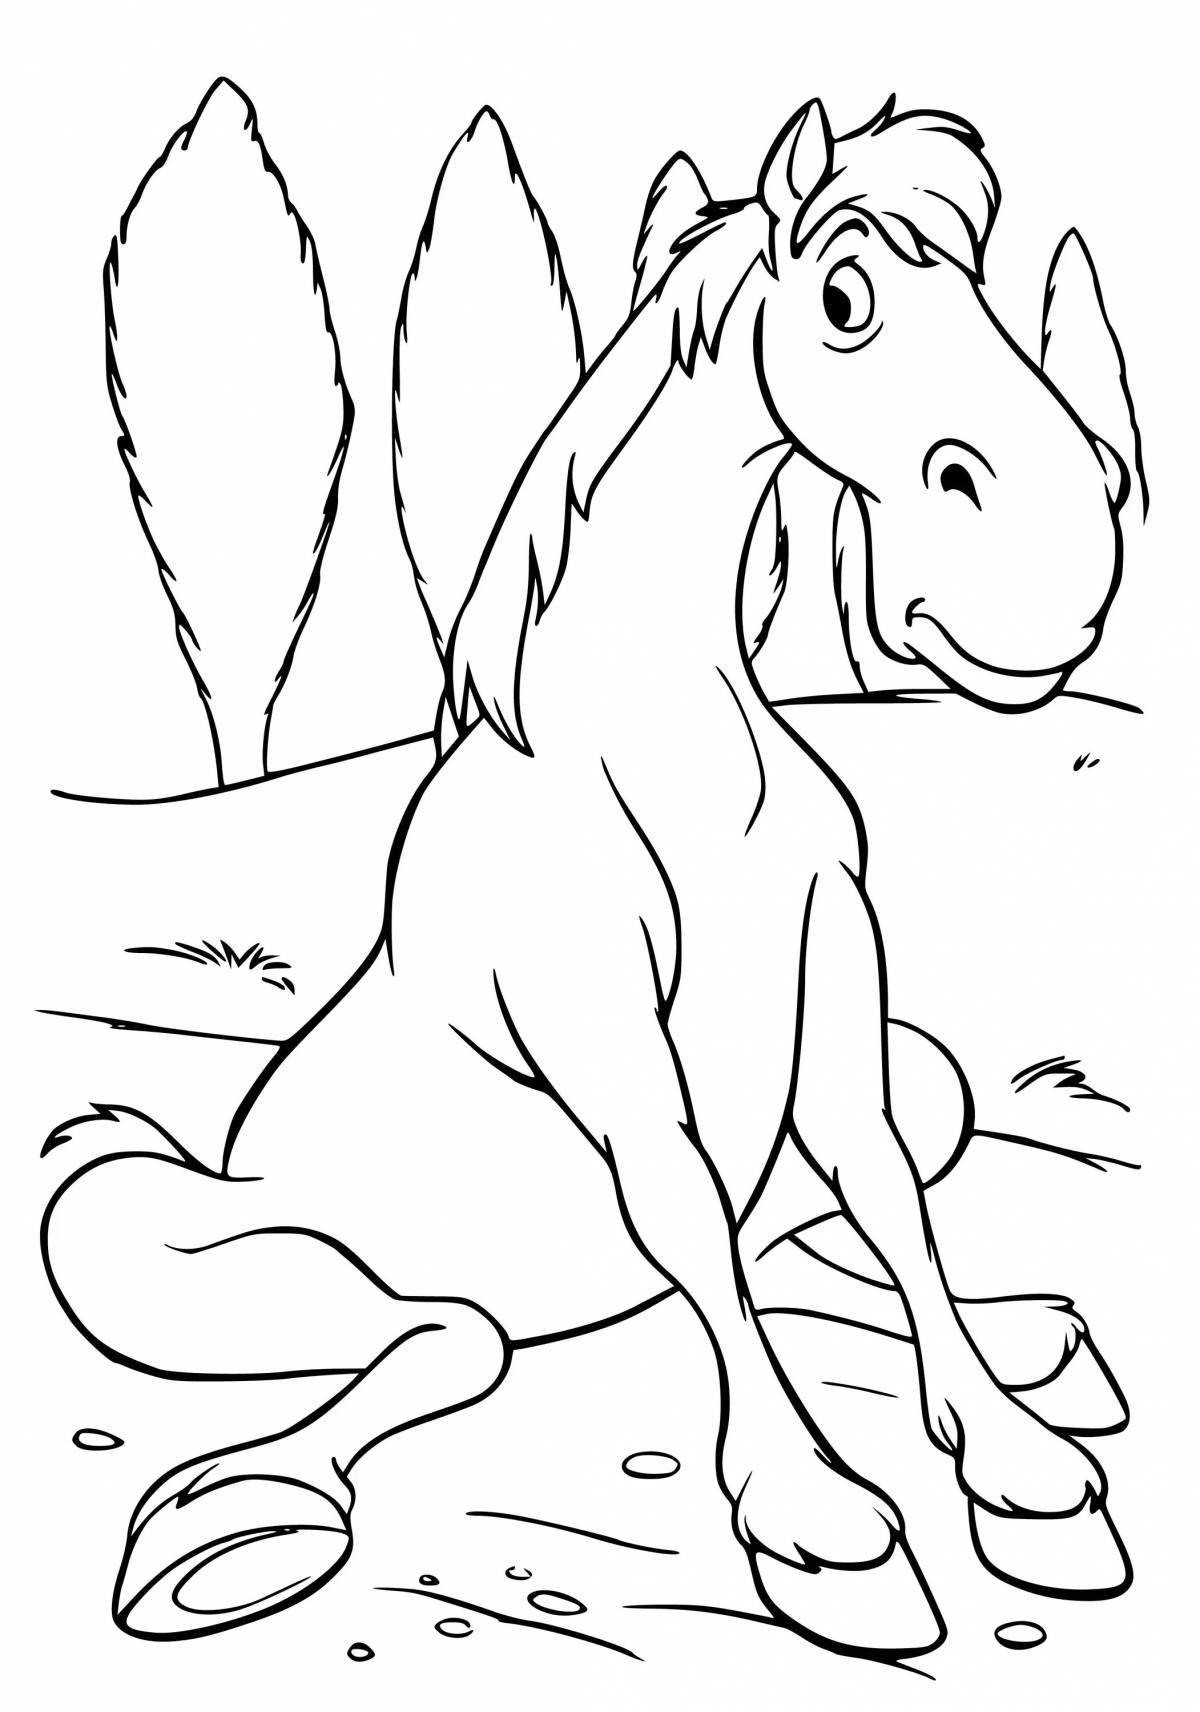 Bright cartoon horse coloring book